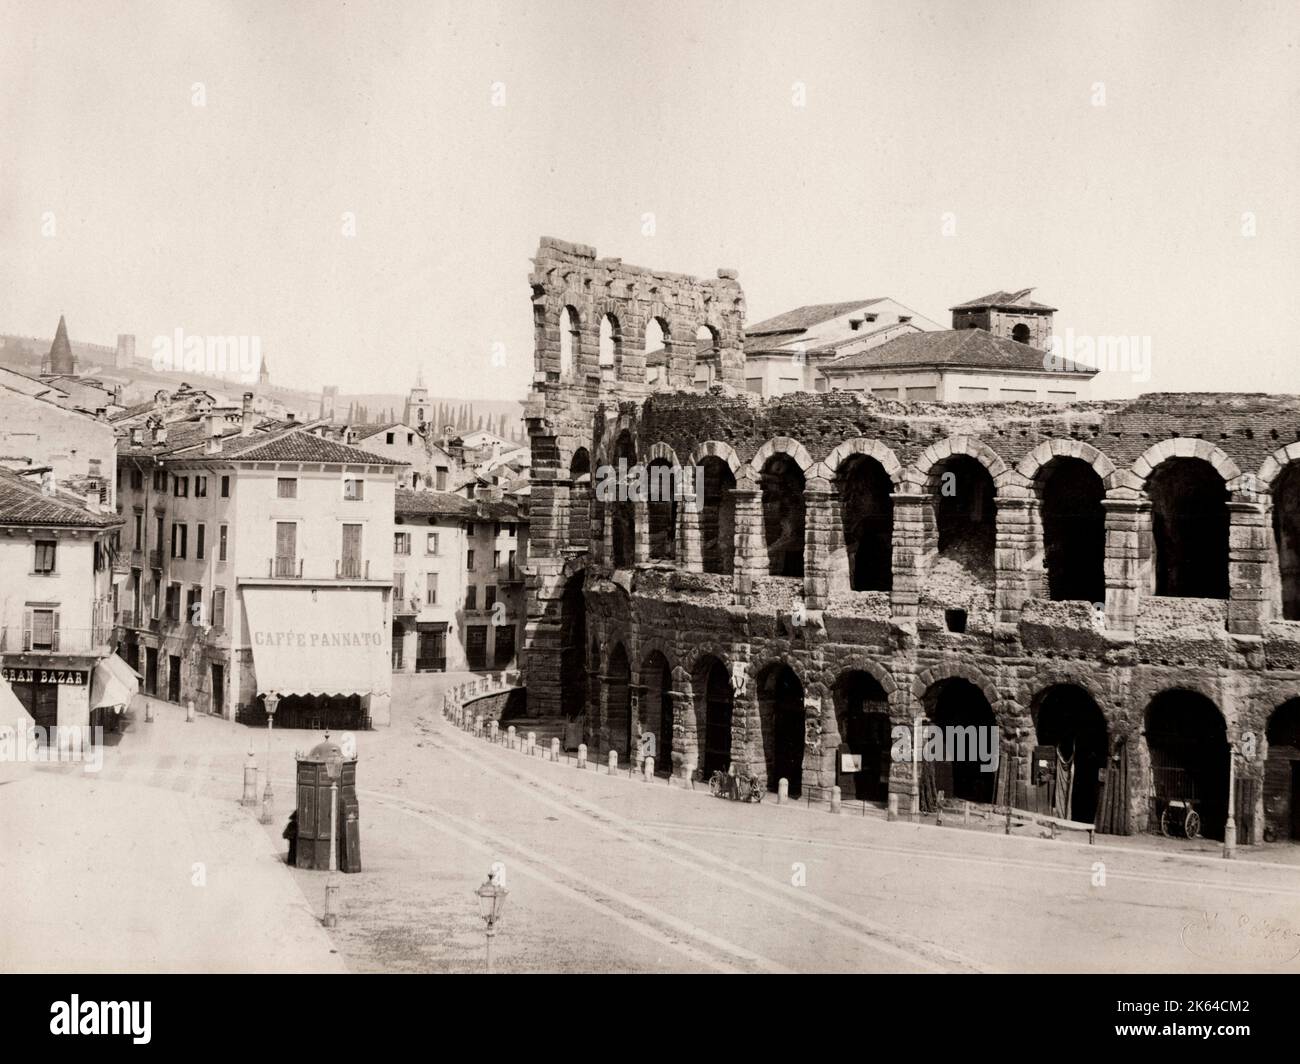 Fotografia d'epoca del XIX secolo - l'Arena romana di Verona, Italia. Foto Stock